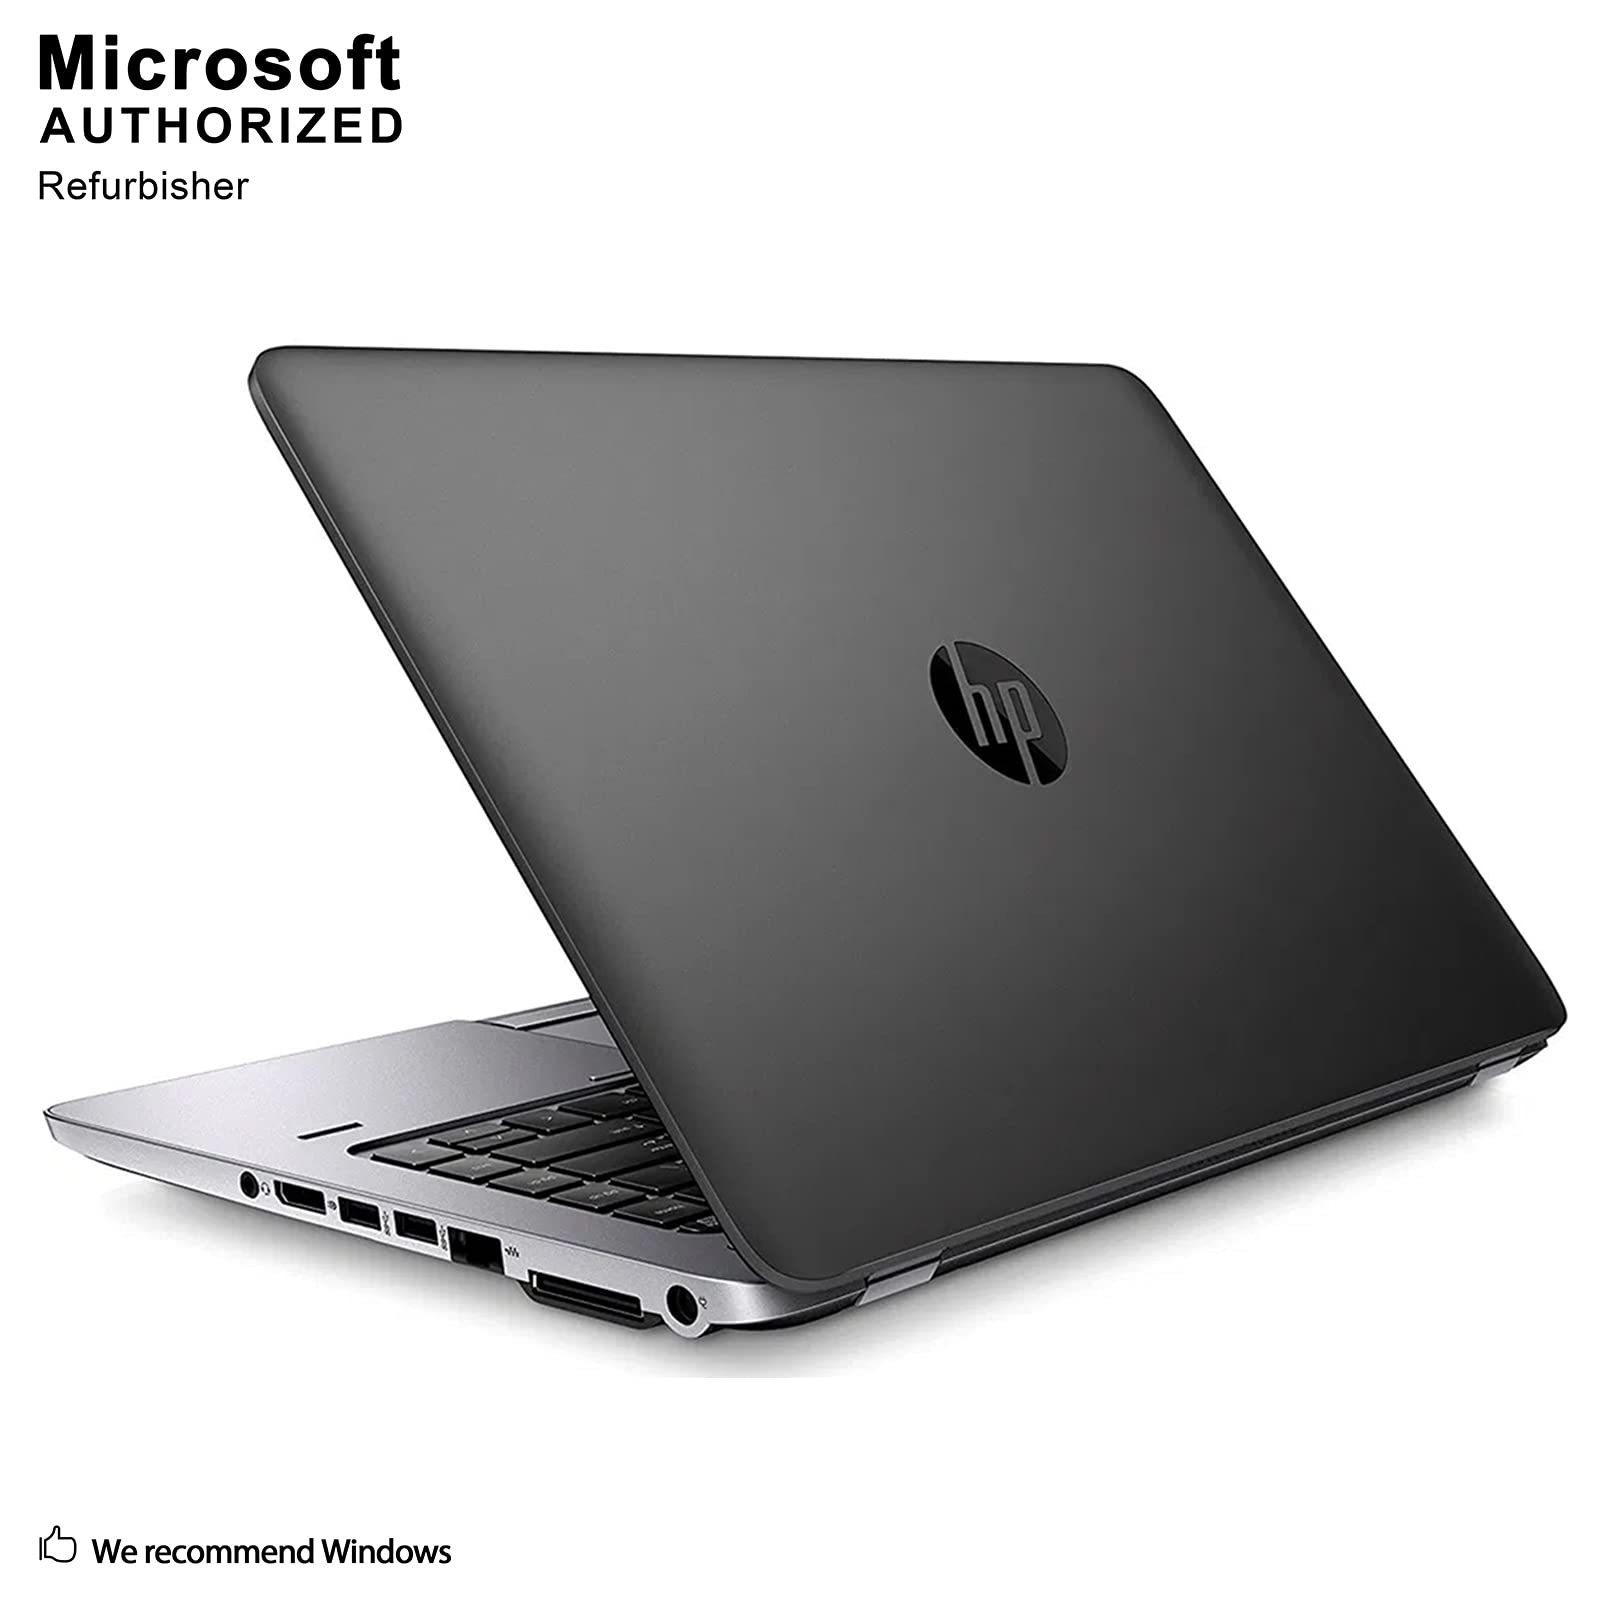 EliteBook 840 G2 Notebook PC